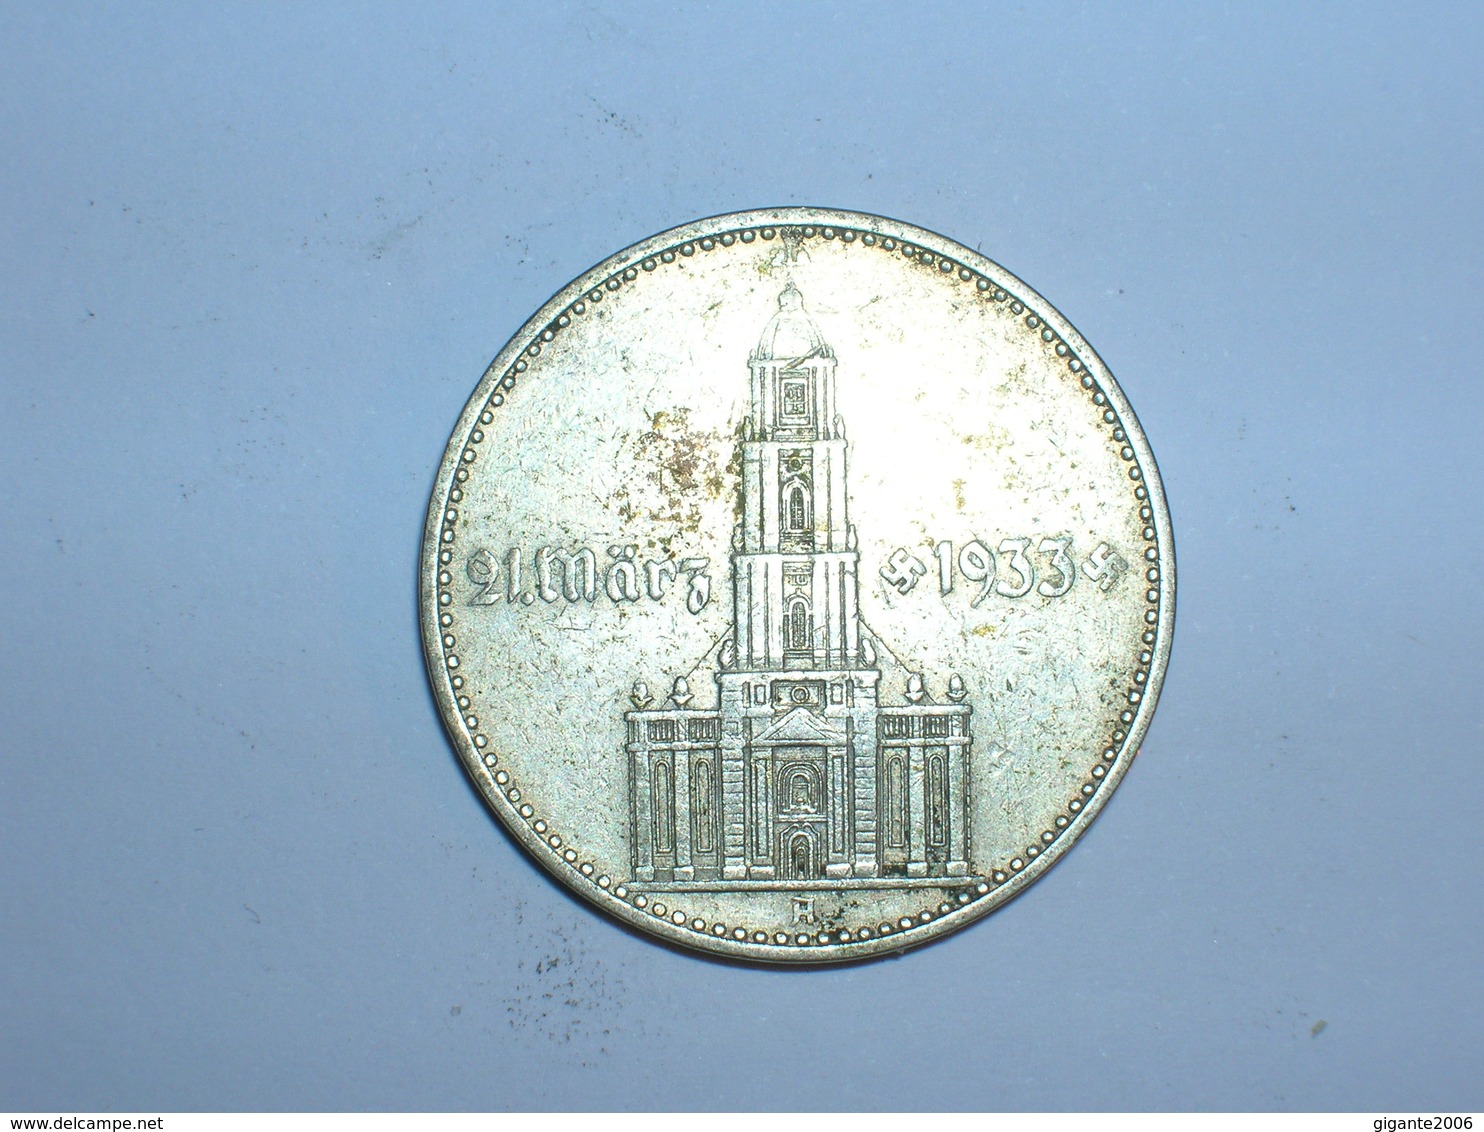 ALEMANIA- 2 MARCOS PLATA 1934 A (1018) - 2 Reichsmark